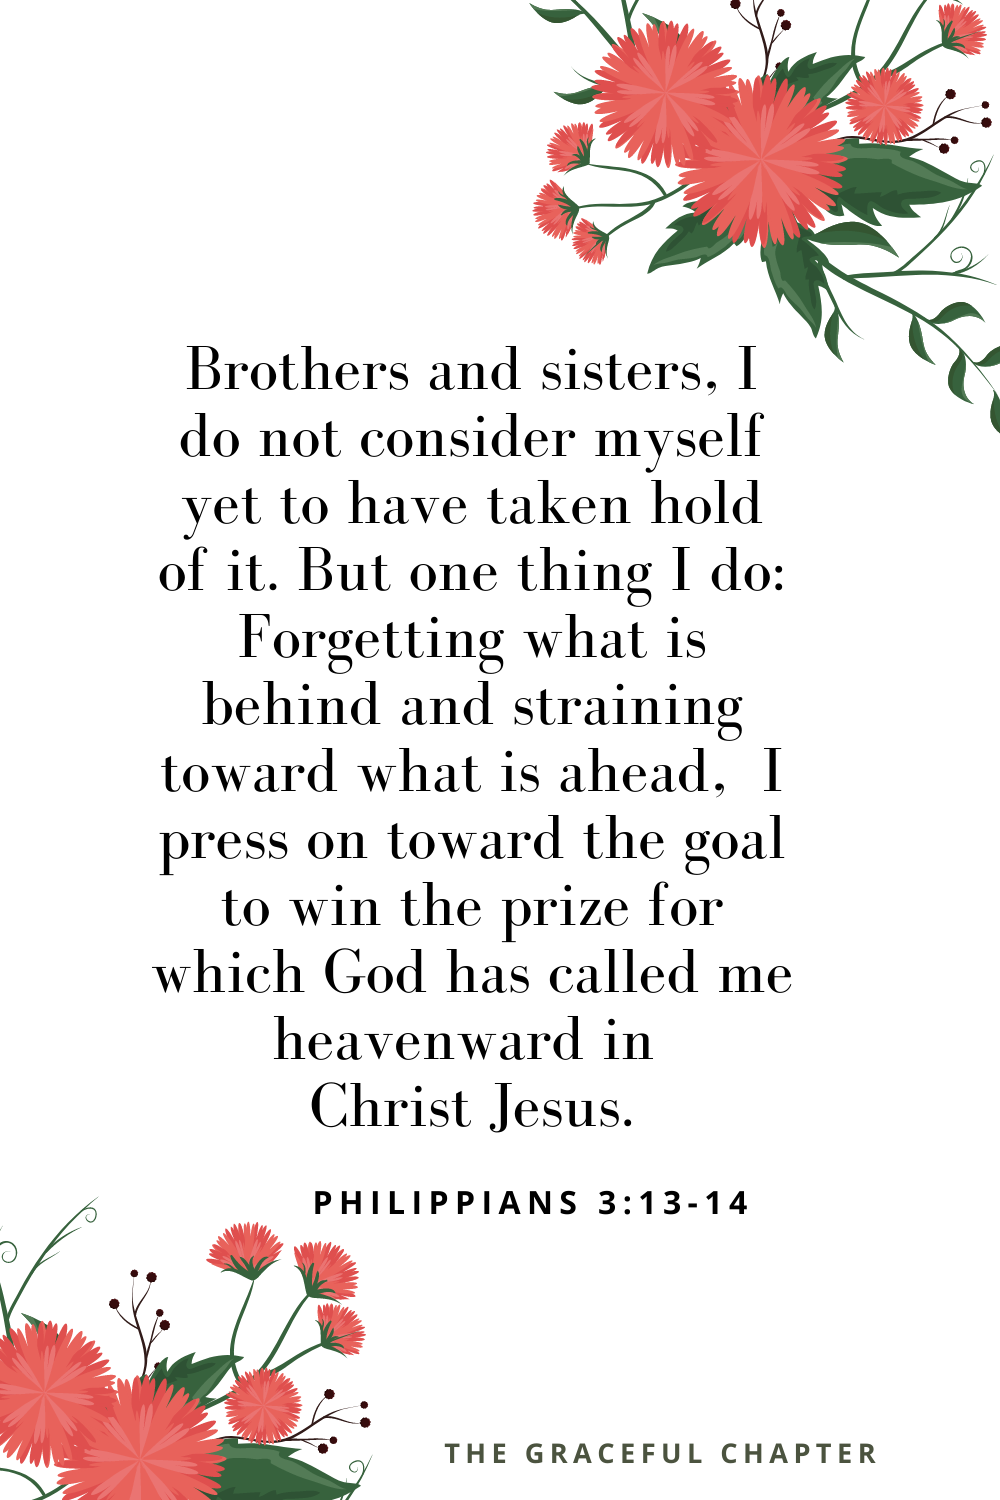 Bible verses on new beginnings Philippians 3:13-14